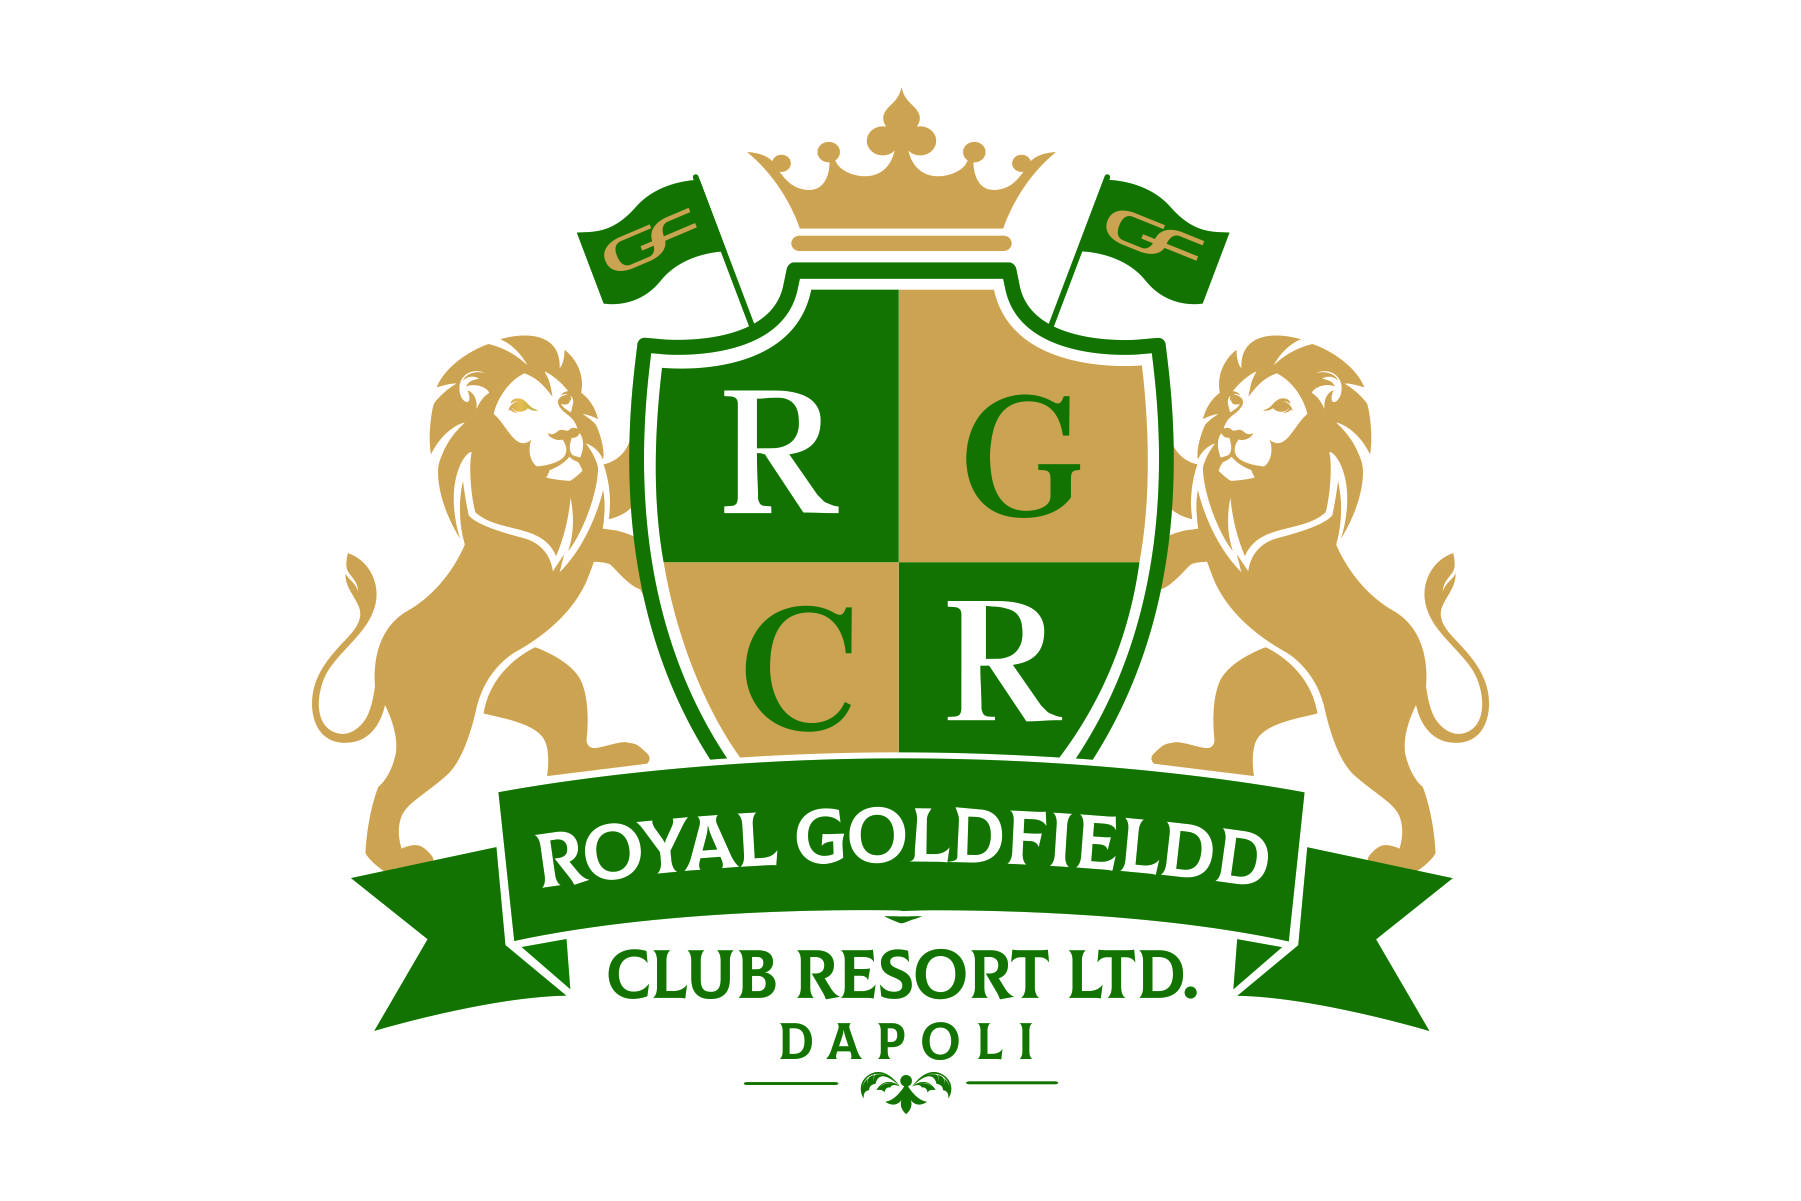 Royal Goldfieldd Club Resort Ltd.(Do not Use)